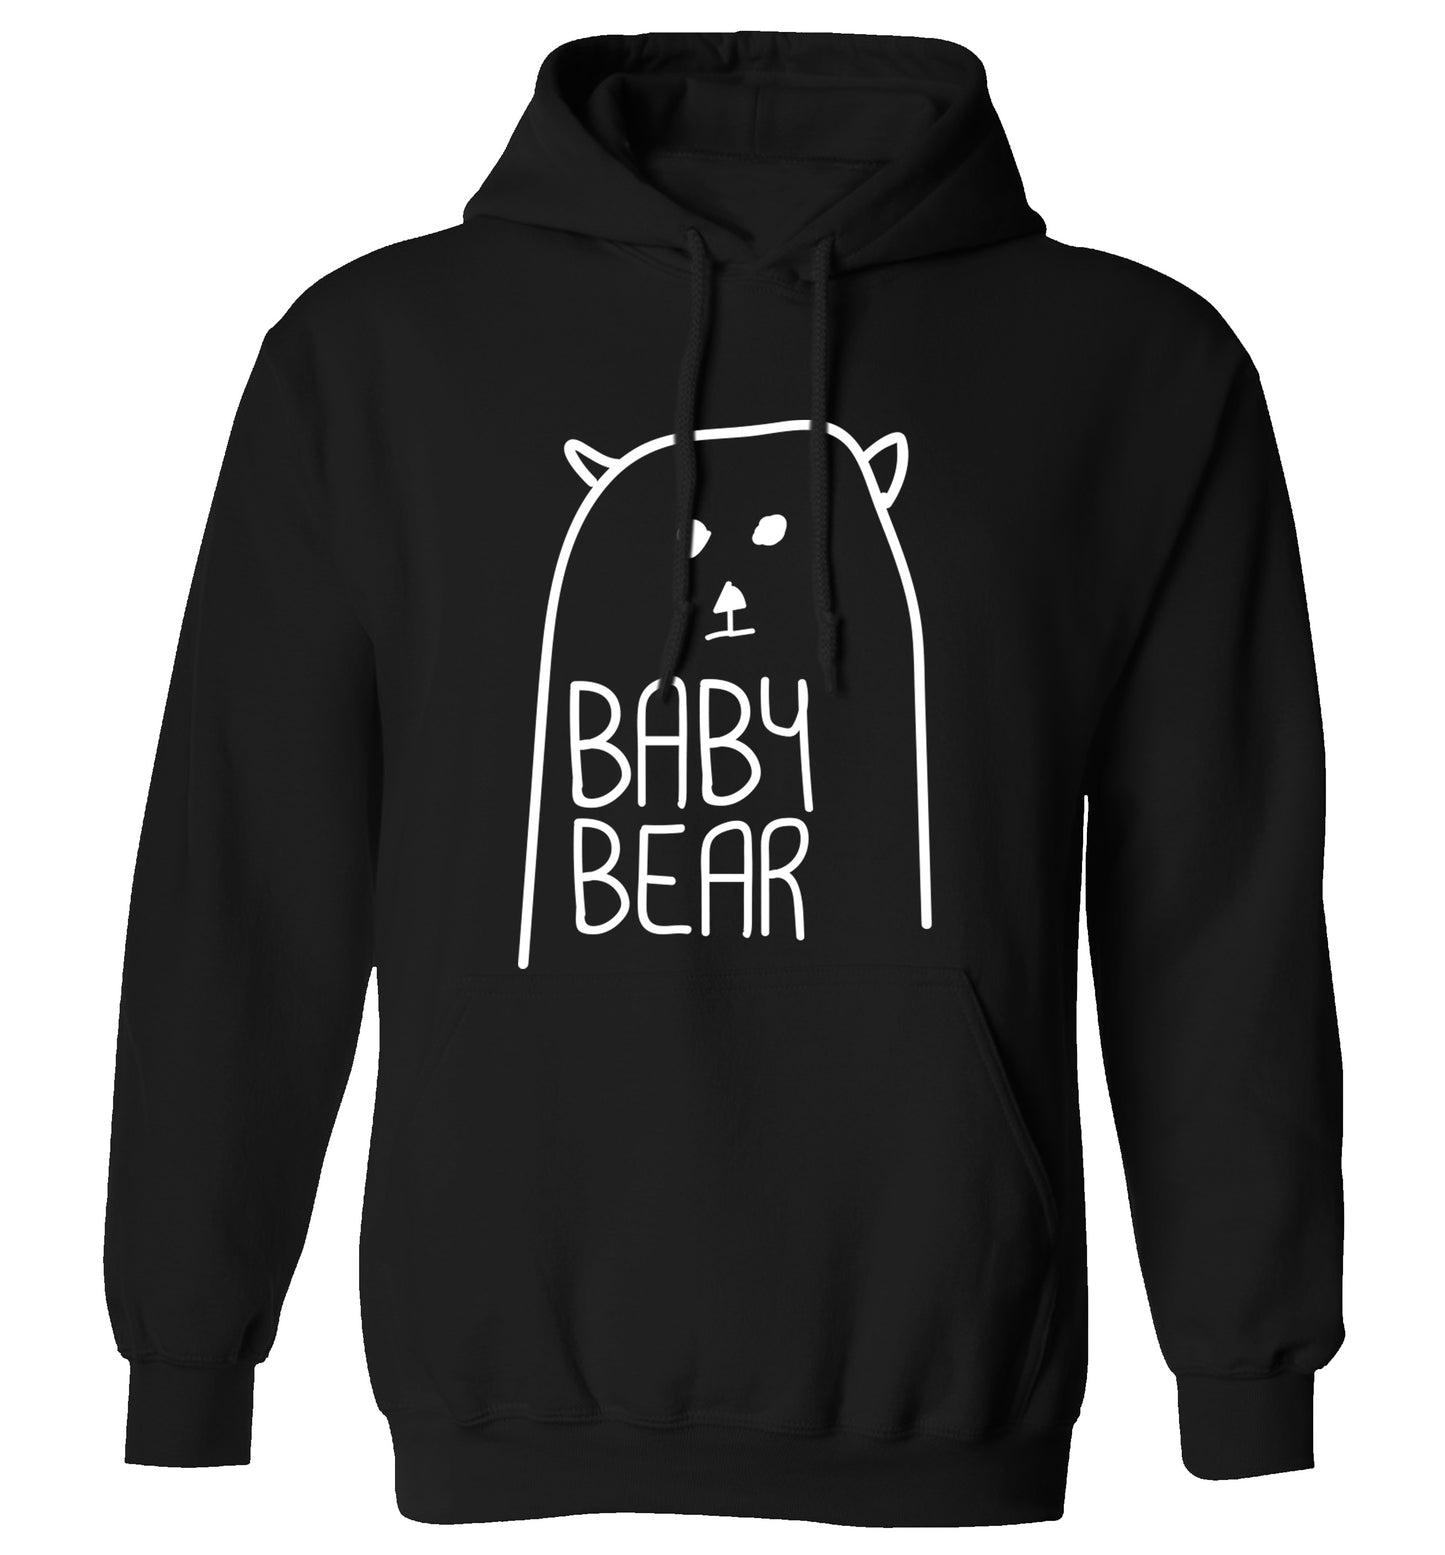 Baby bear adults unisex black hoodie 2XL